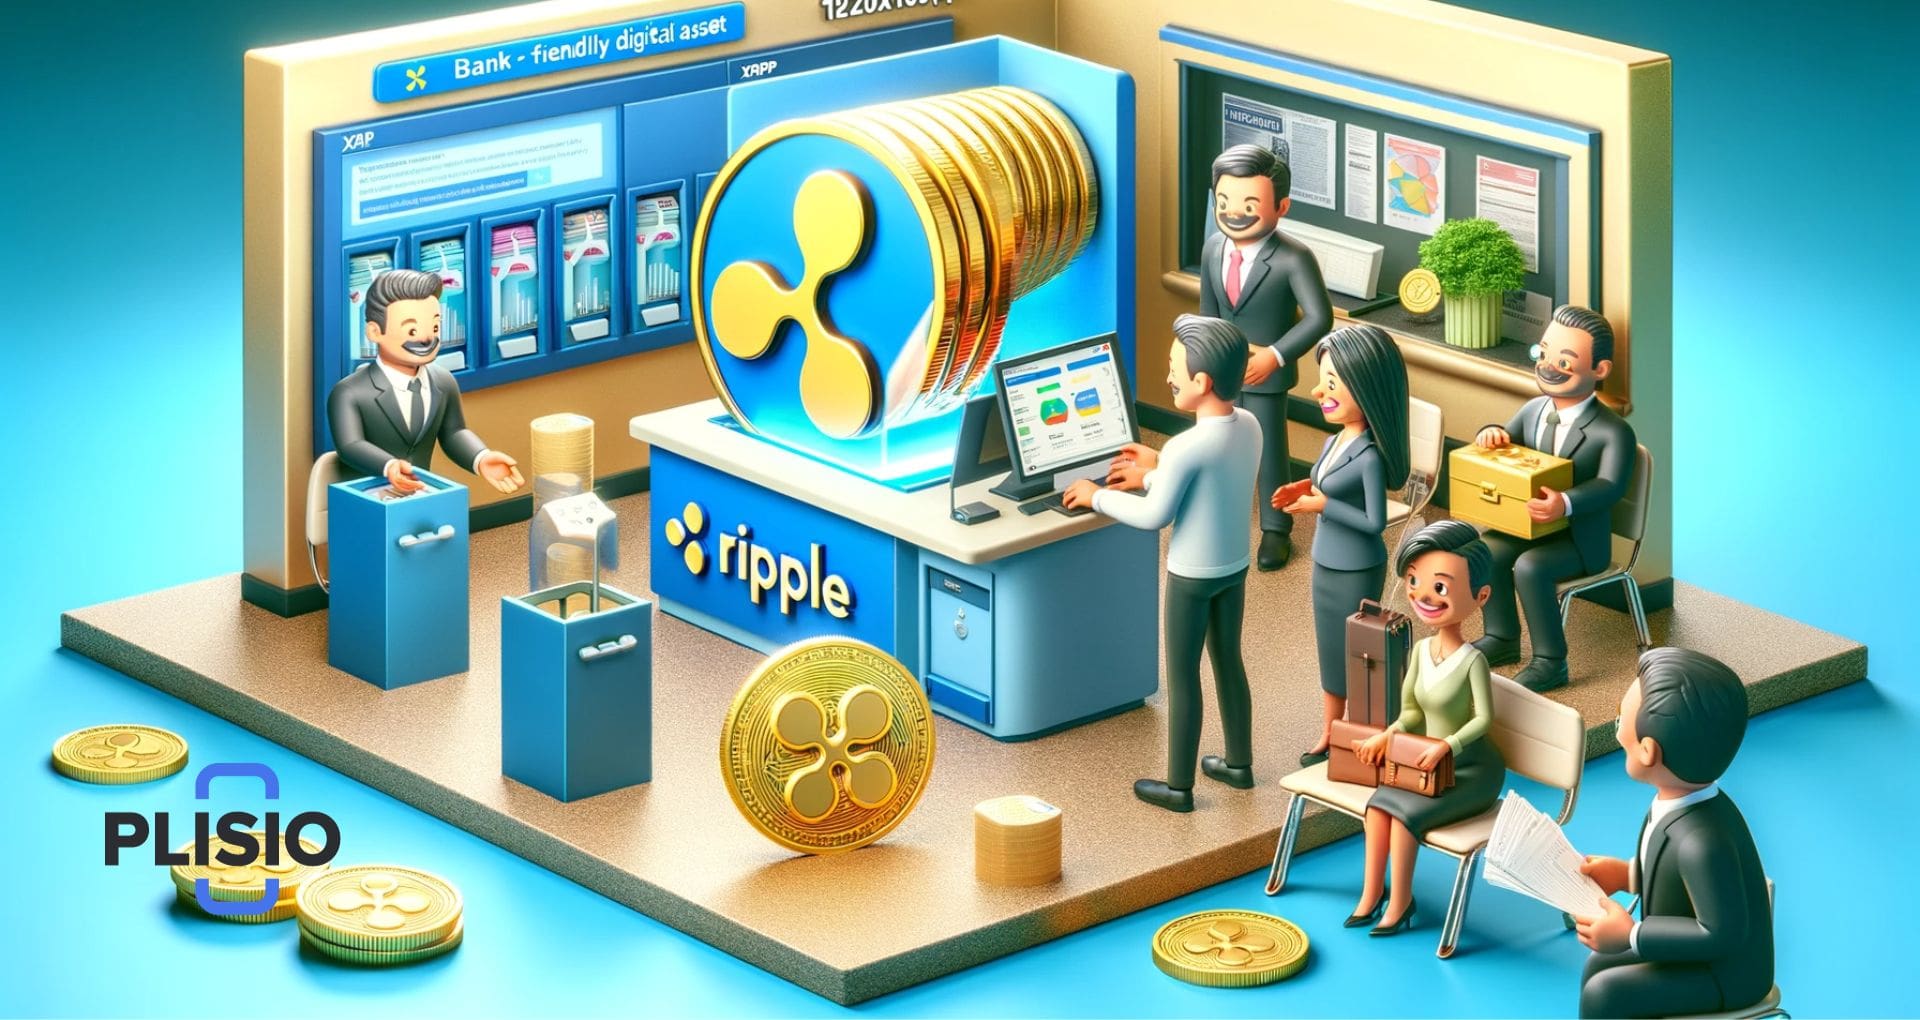 Ripple (XRP): The Bank-Friendly Digital Asset